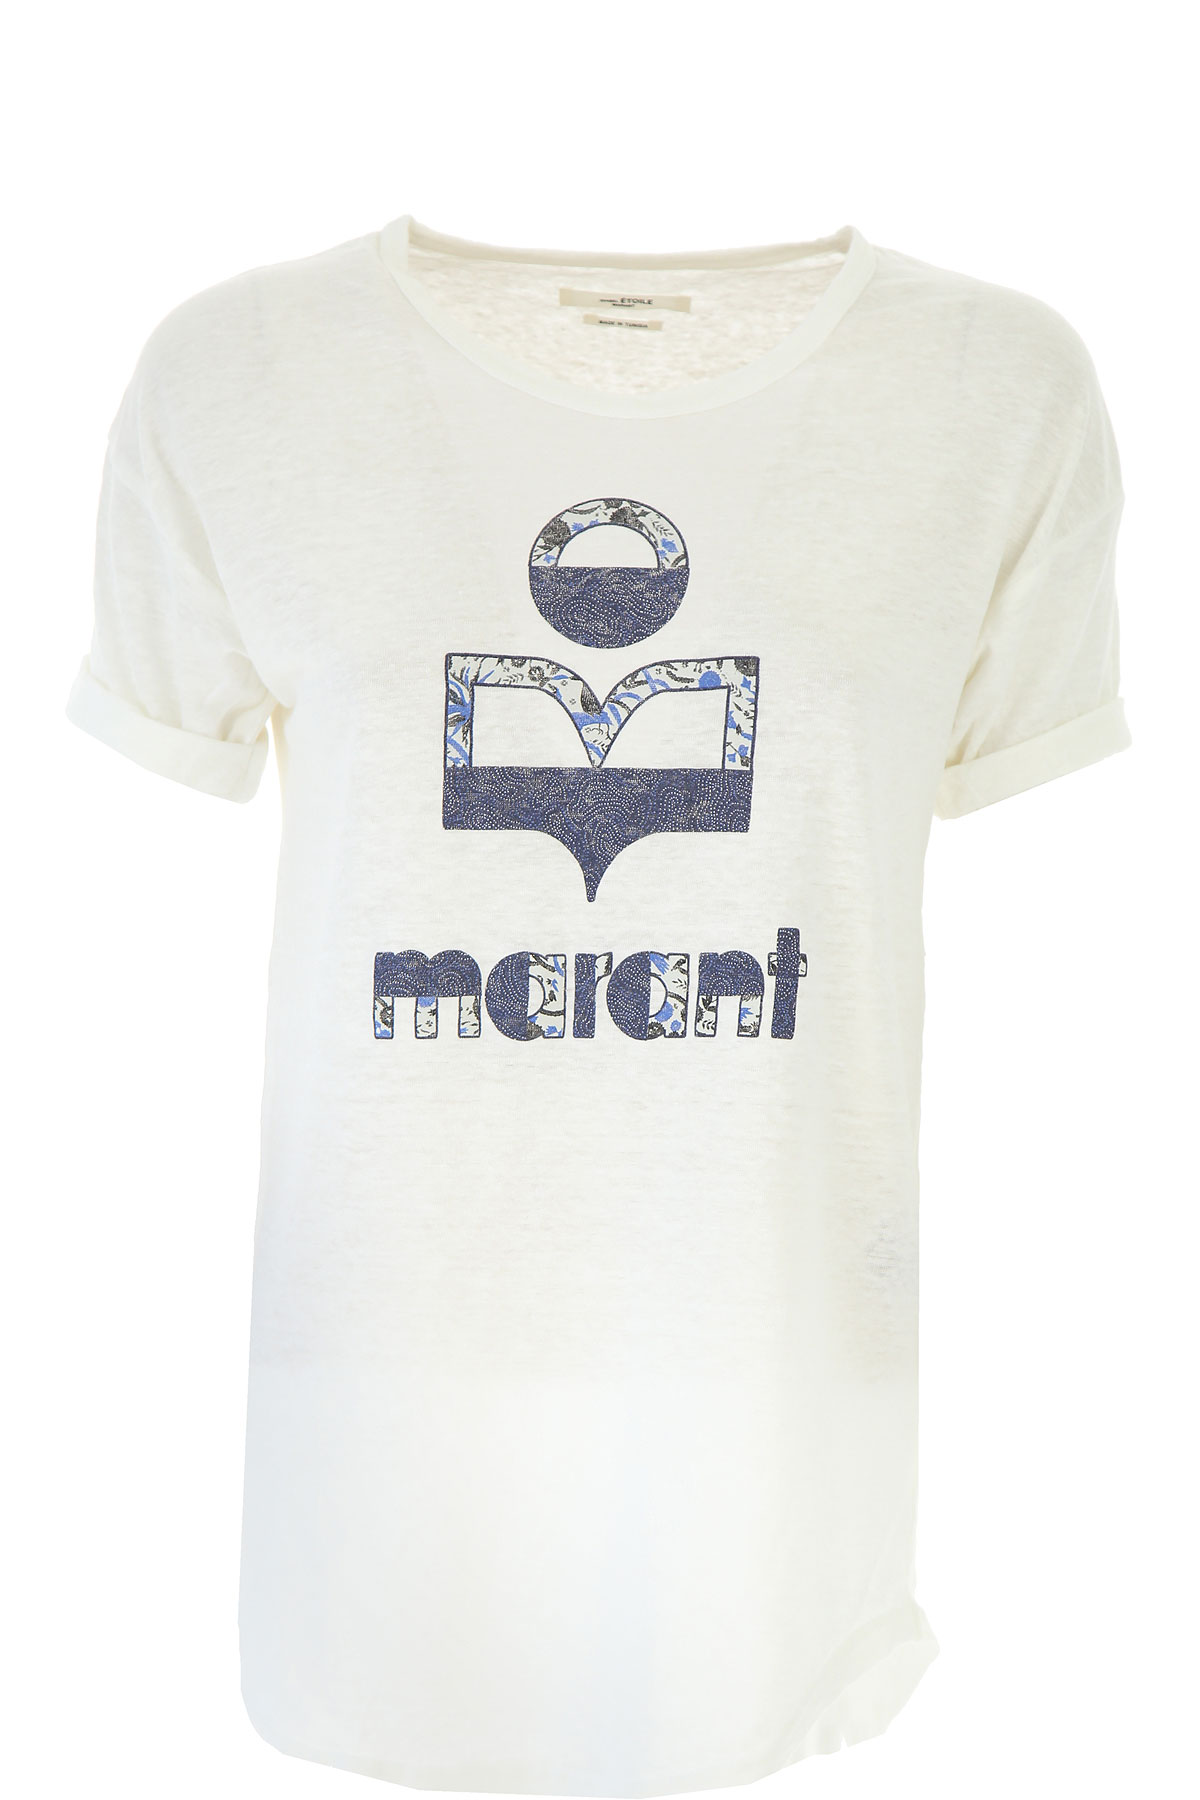 Isabel Marant T-shirt Femme, Blanc, Lin, 2017, 40 42 44